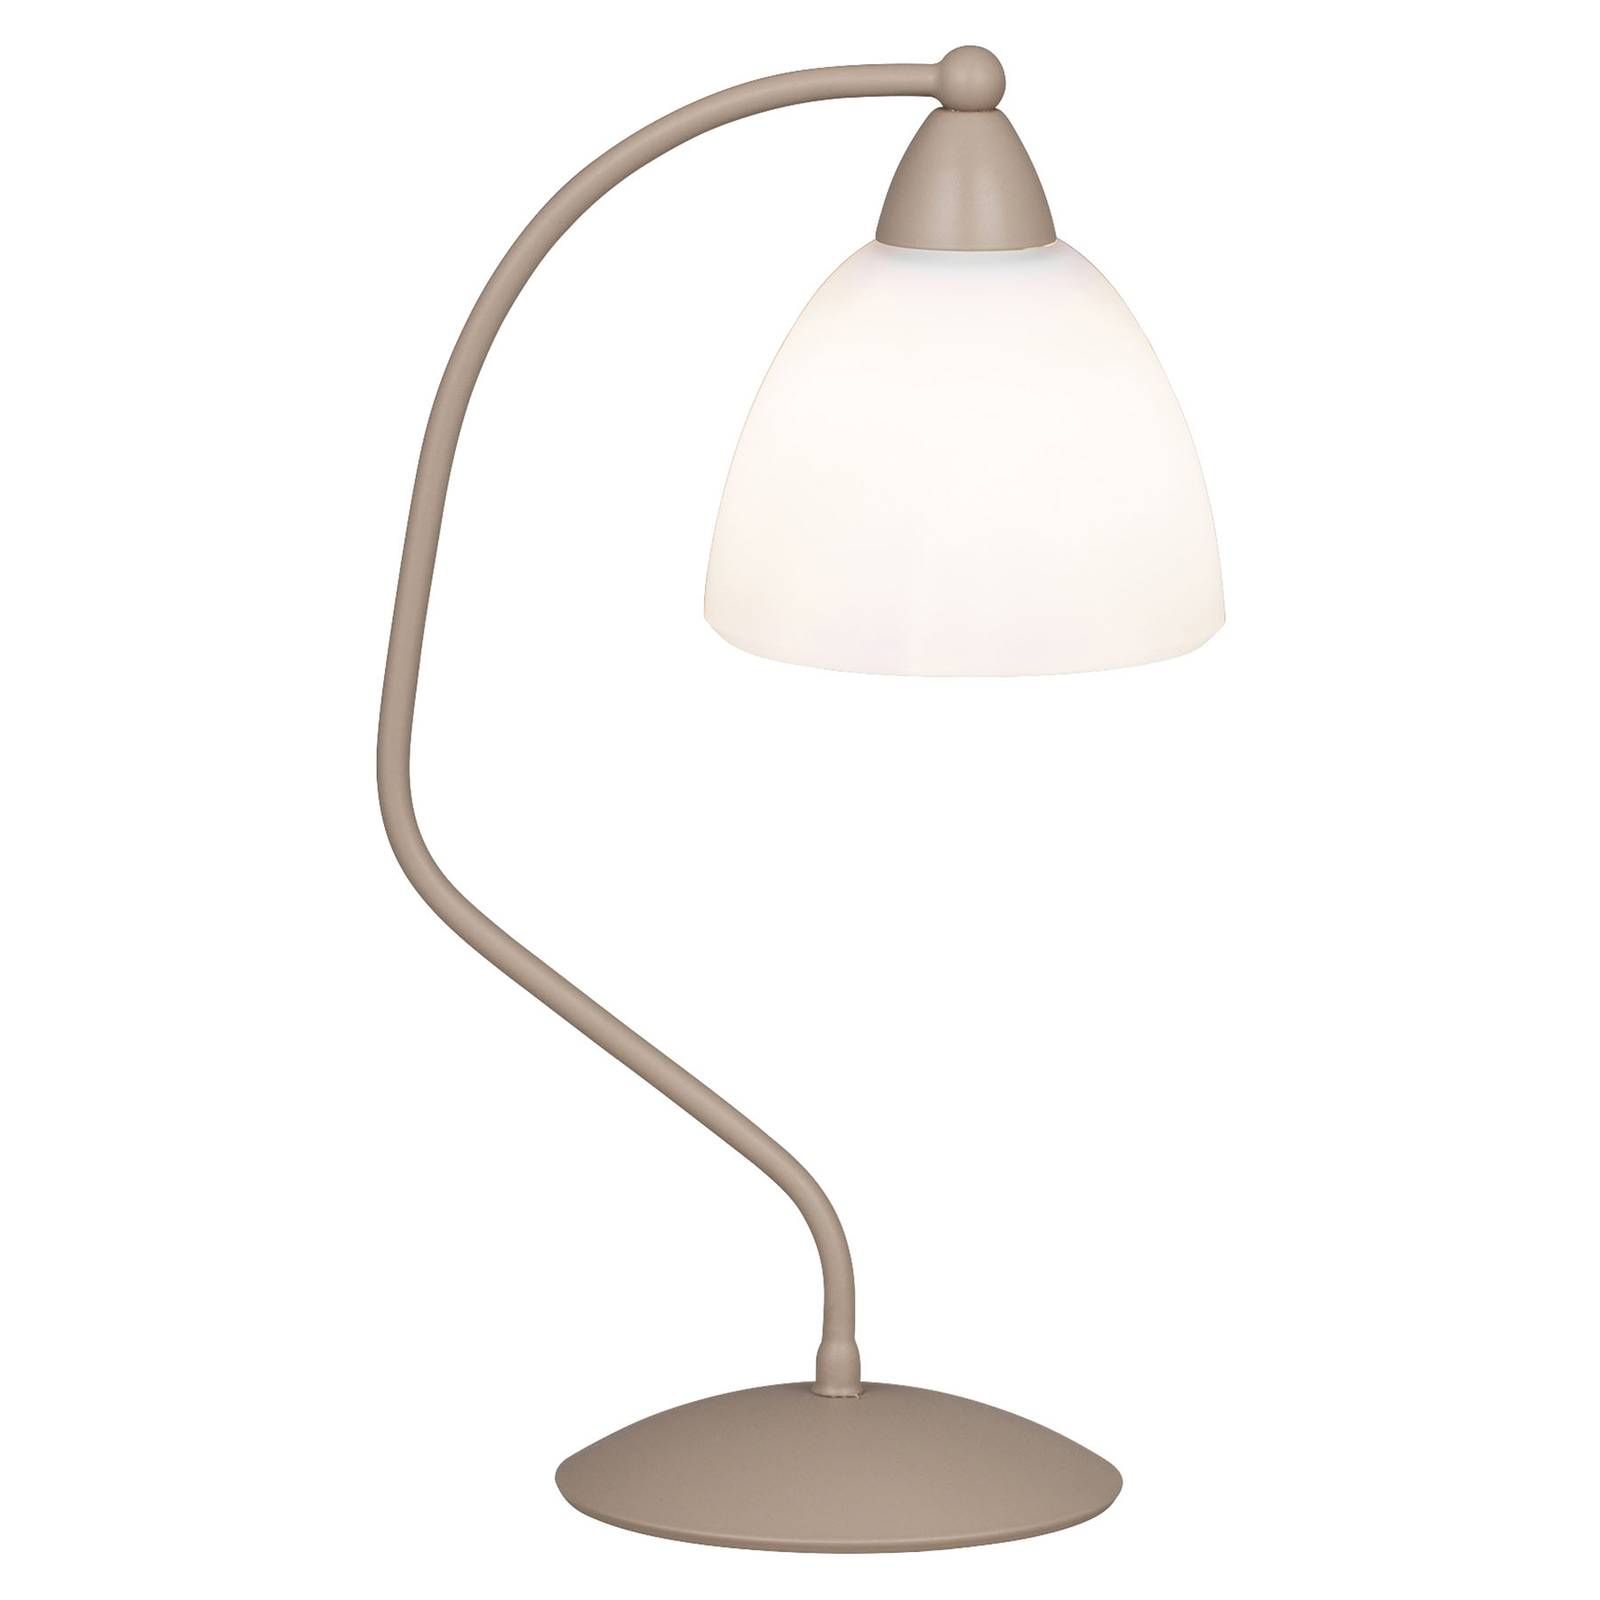 Lam Stolná lampa 1795/1L biela, havana béžová, Obývacia izba / jedáleň, železo, sklo, E14, 28W, K: 37cm